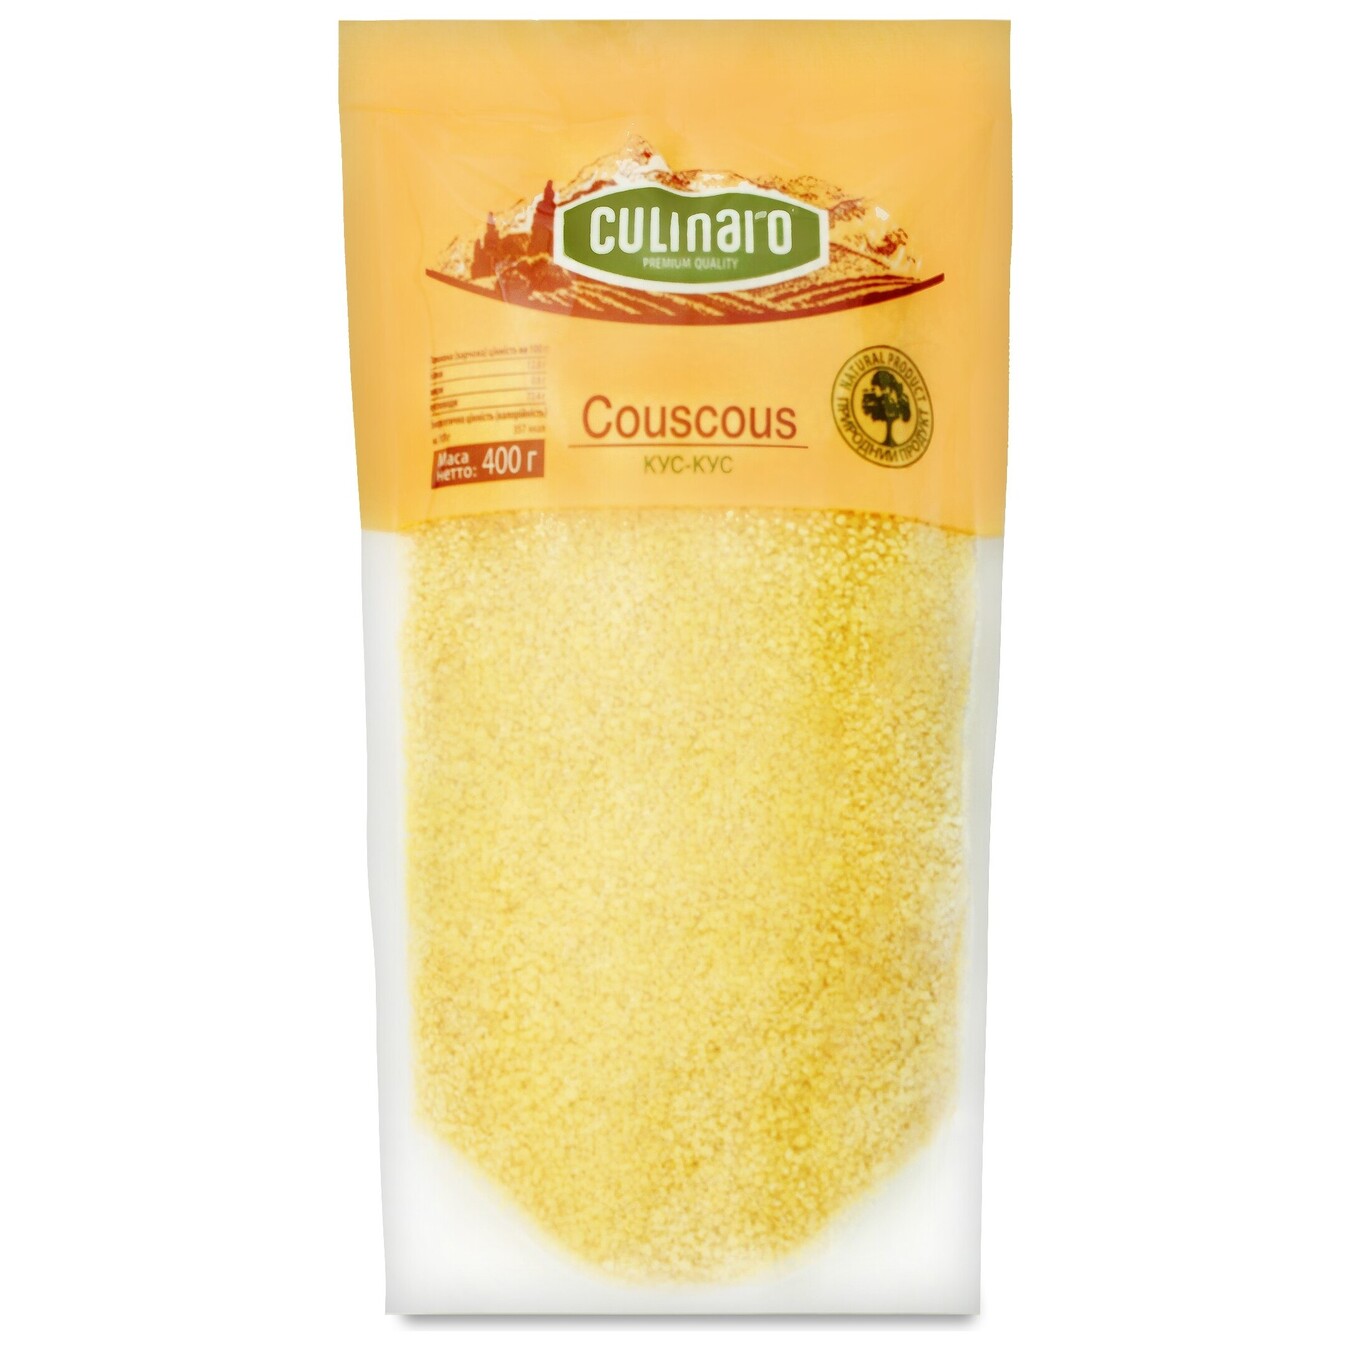 Culinaro Couscous 400g